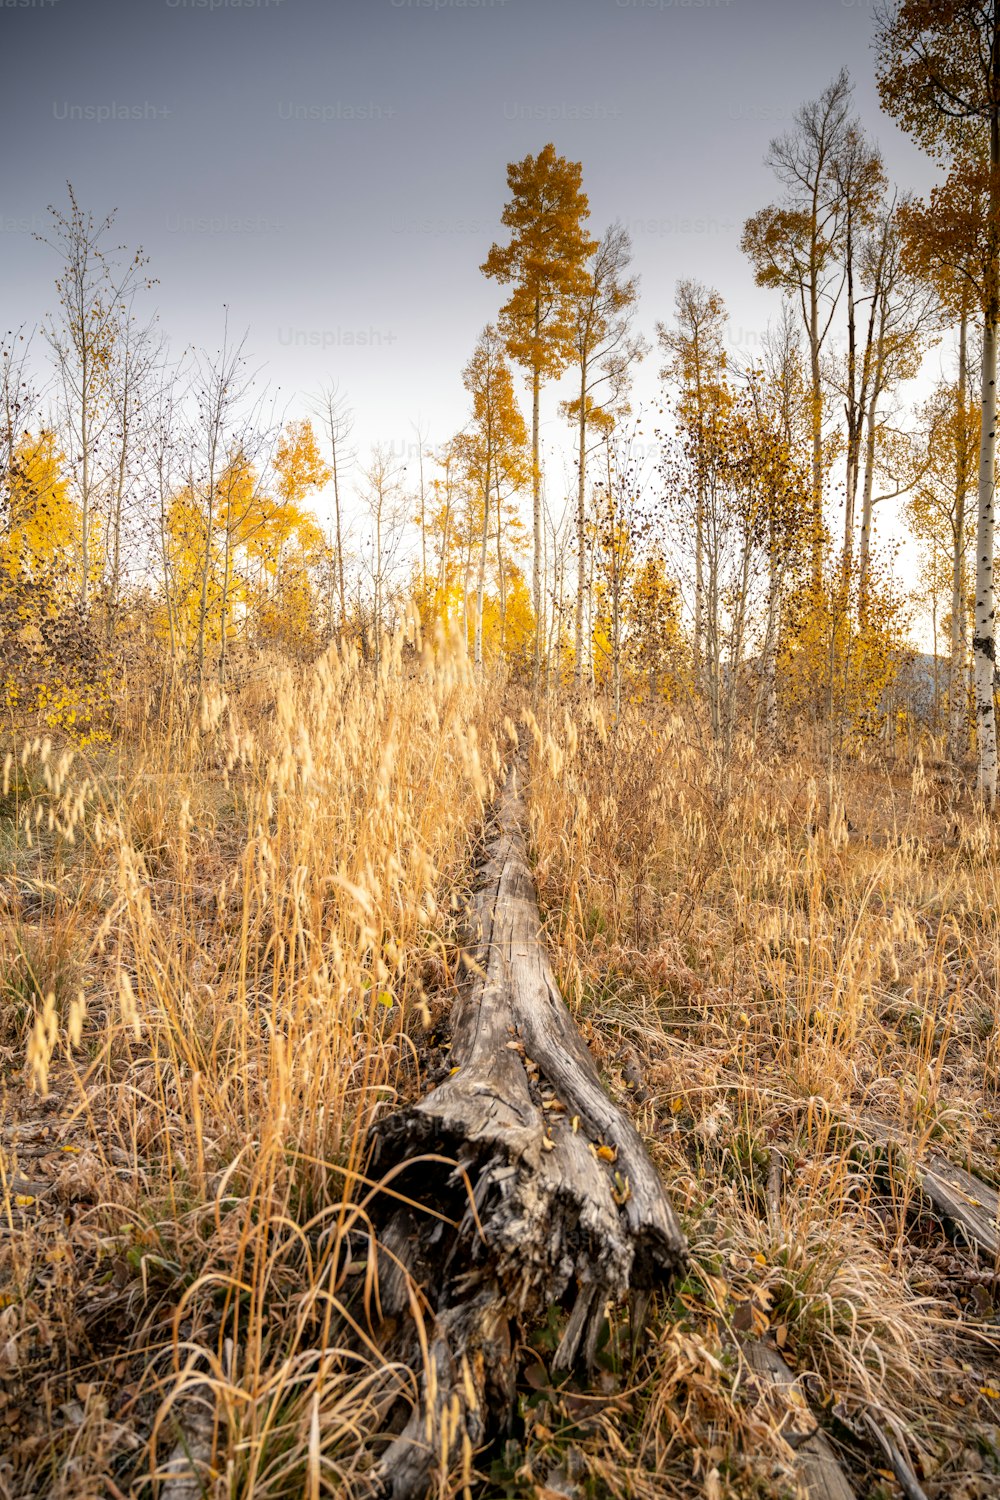 a fallen tree in the middle of a field